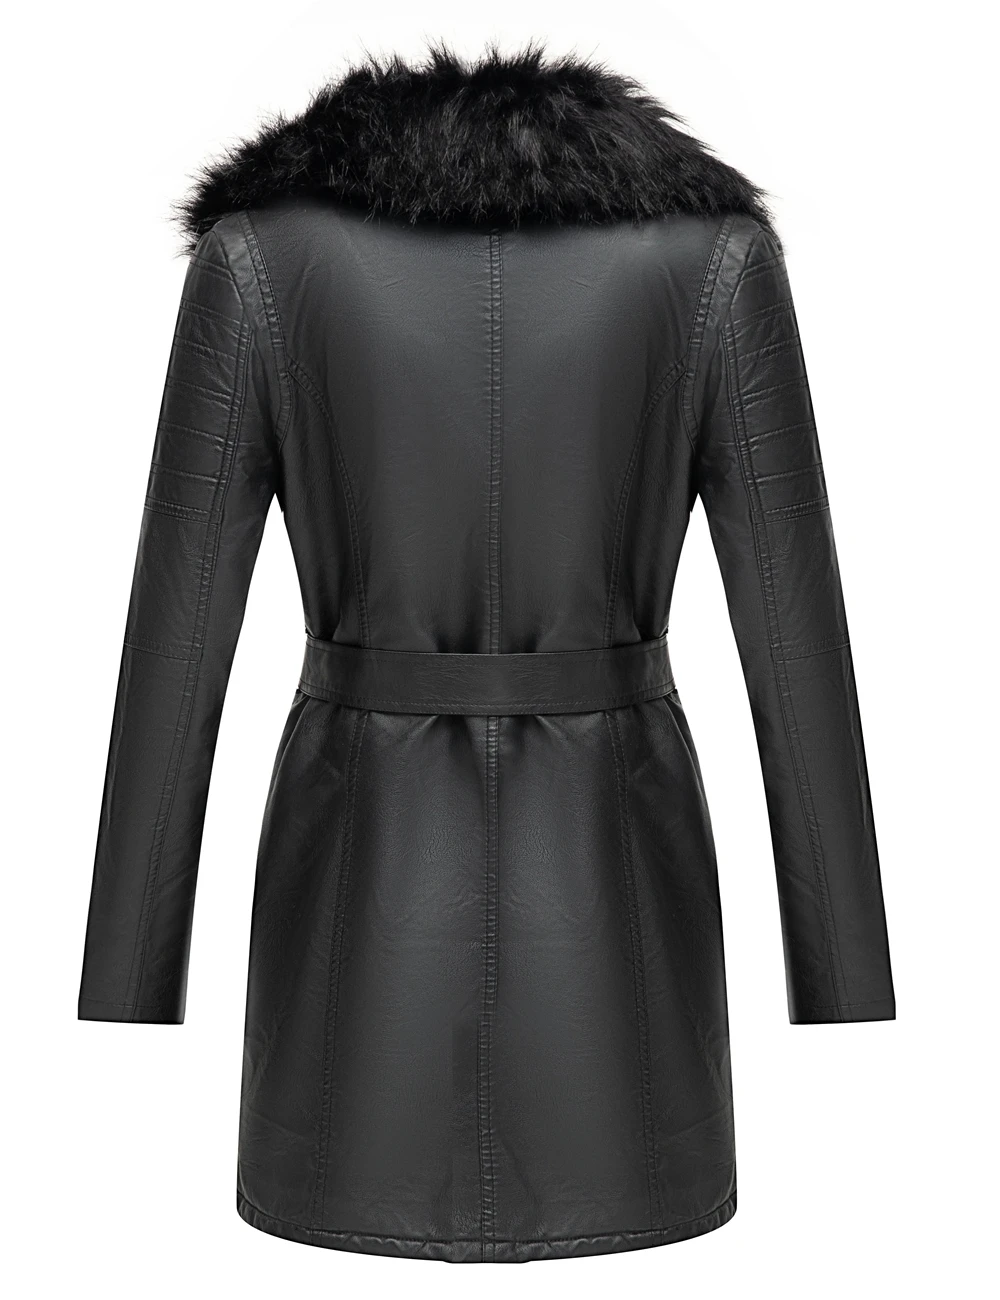 Giolshon Women Faux Suede Leather Long Jacket Wonderfully Parka Coat With Detachable  Fur Collar Winter Female Outwear enlarge